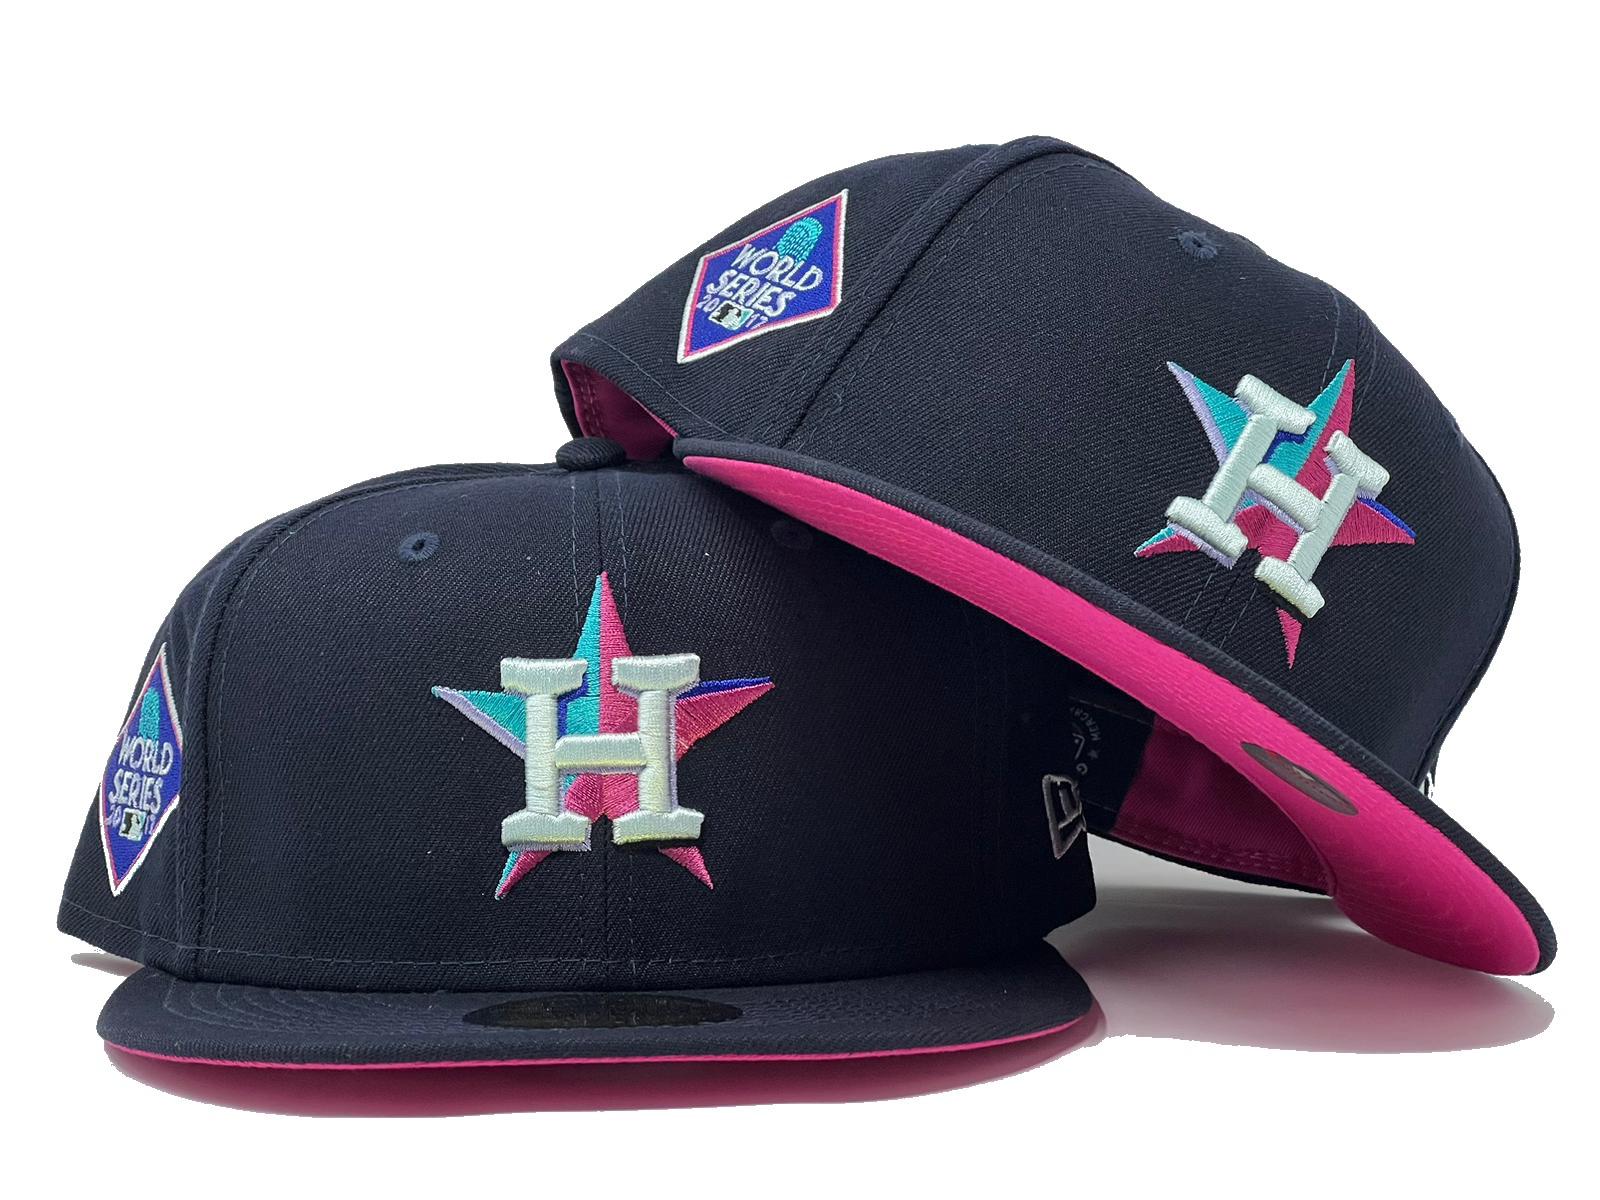 Houston Astros New Era 2017 MLB World Series Champions Fitted Hat - Navy